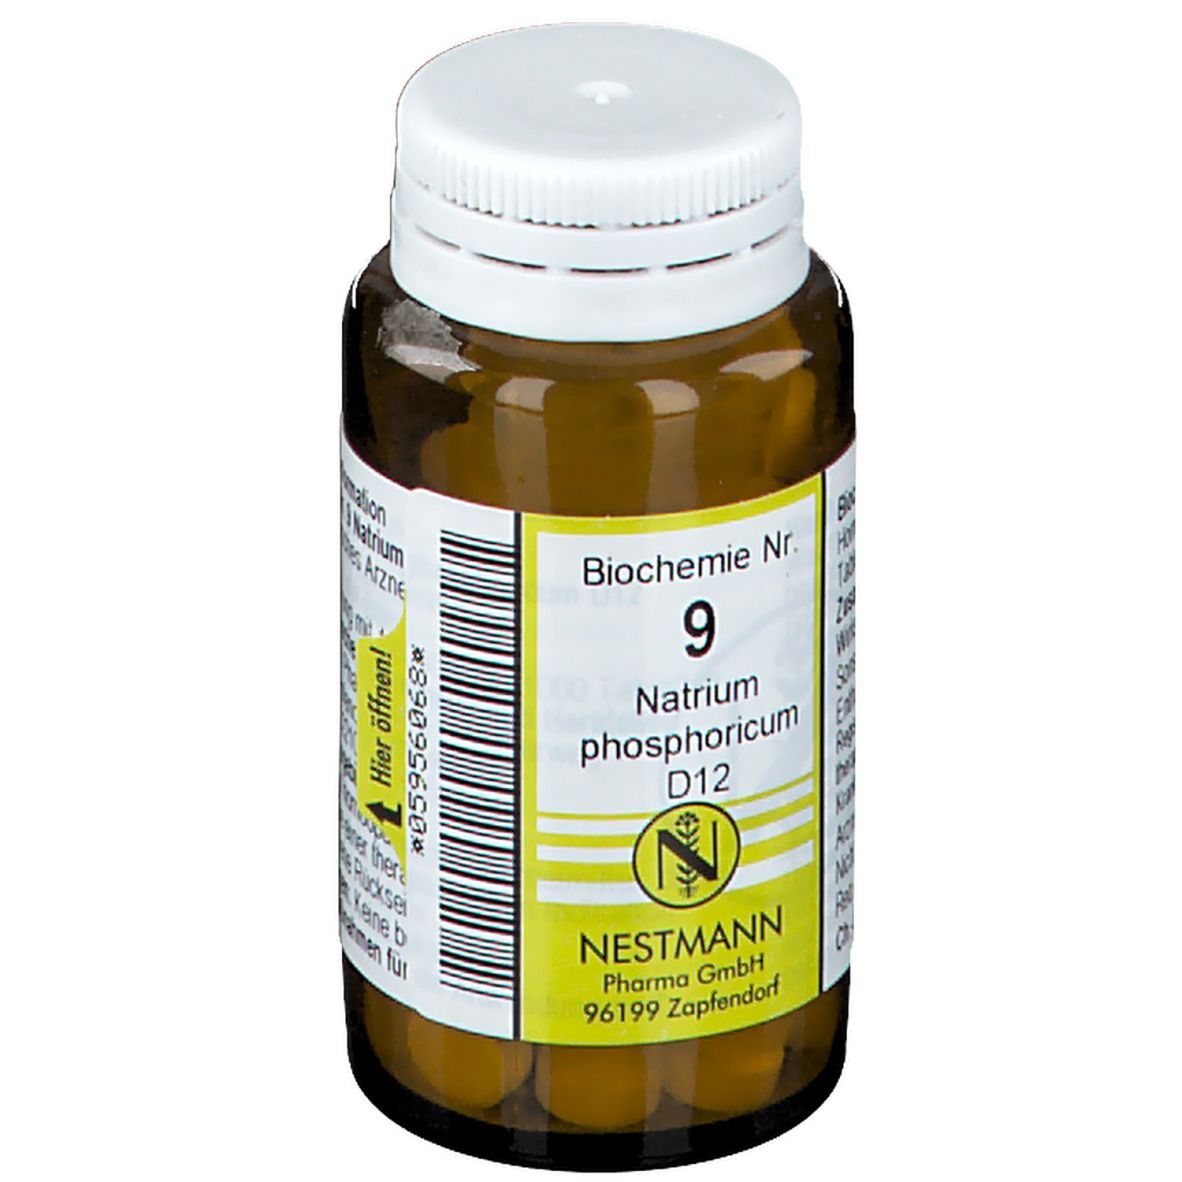 Biochemie Nr. 9 Natrium phosphoricum D12